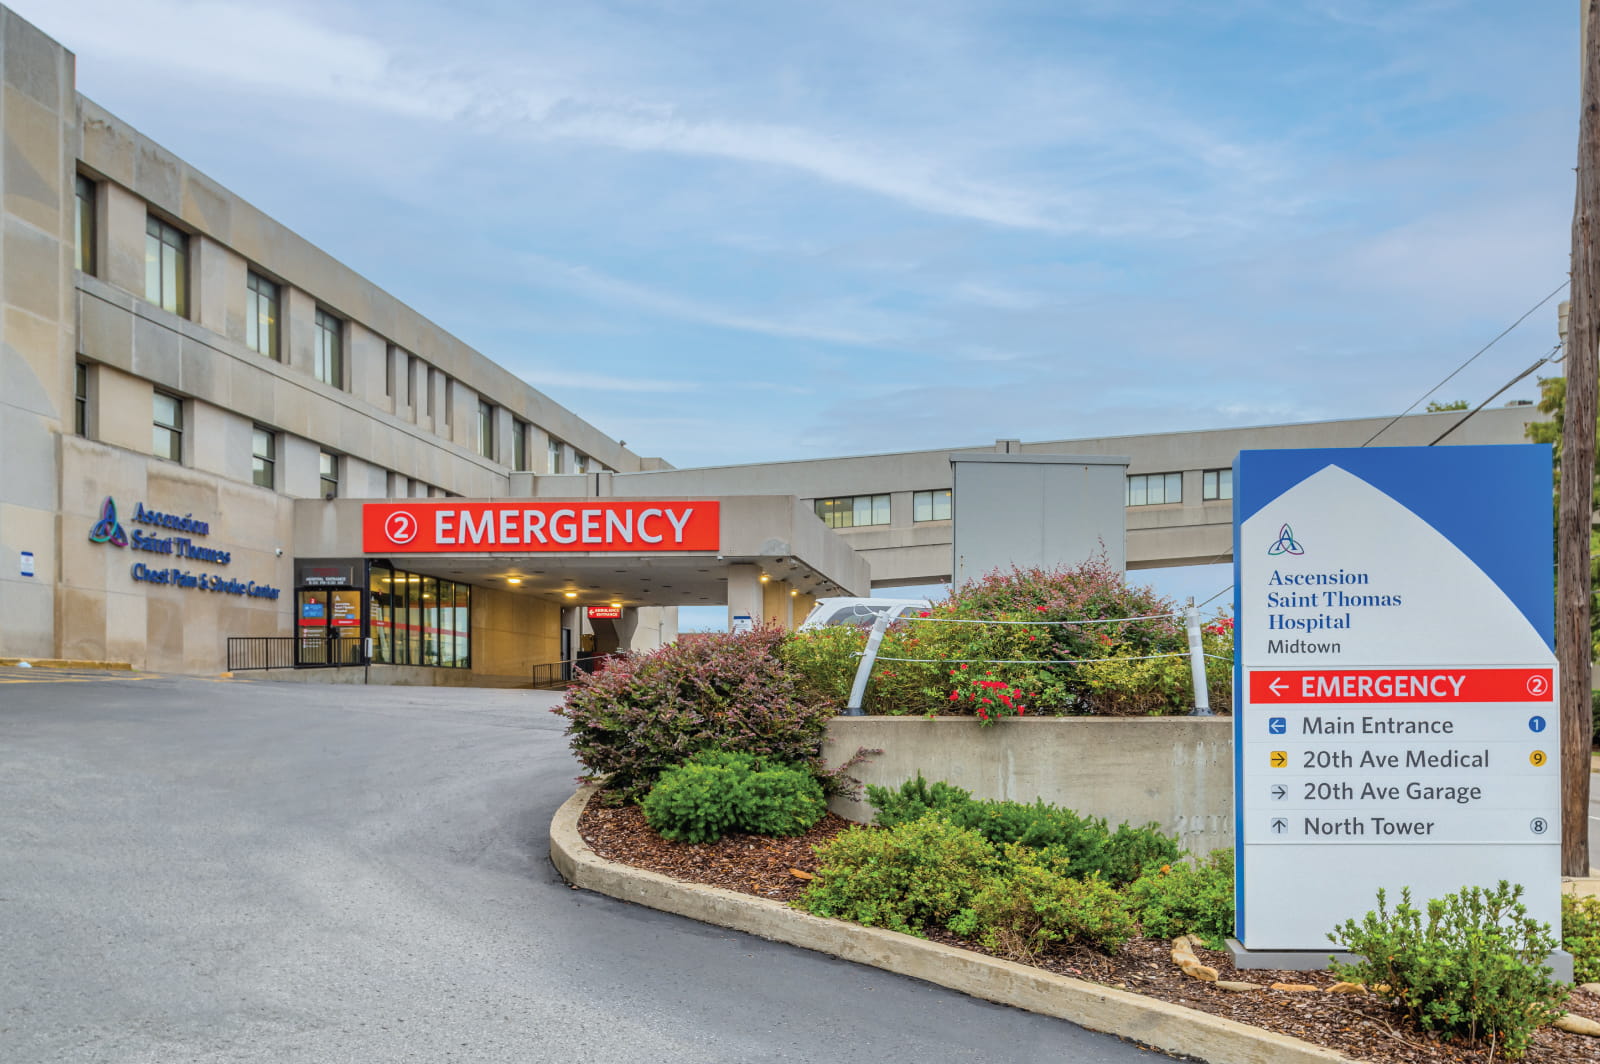 Ascension Saint Thomas Hospital Midtown - Emergency